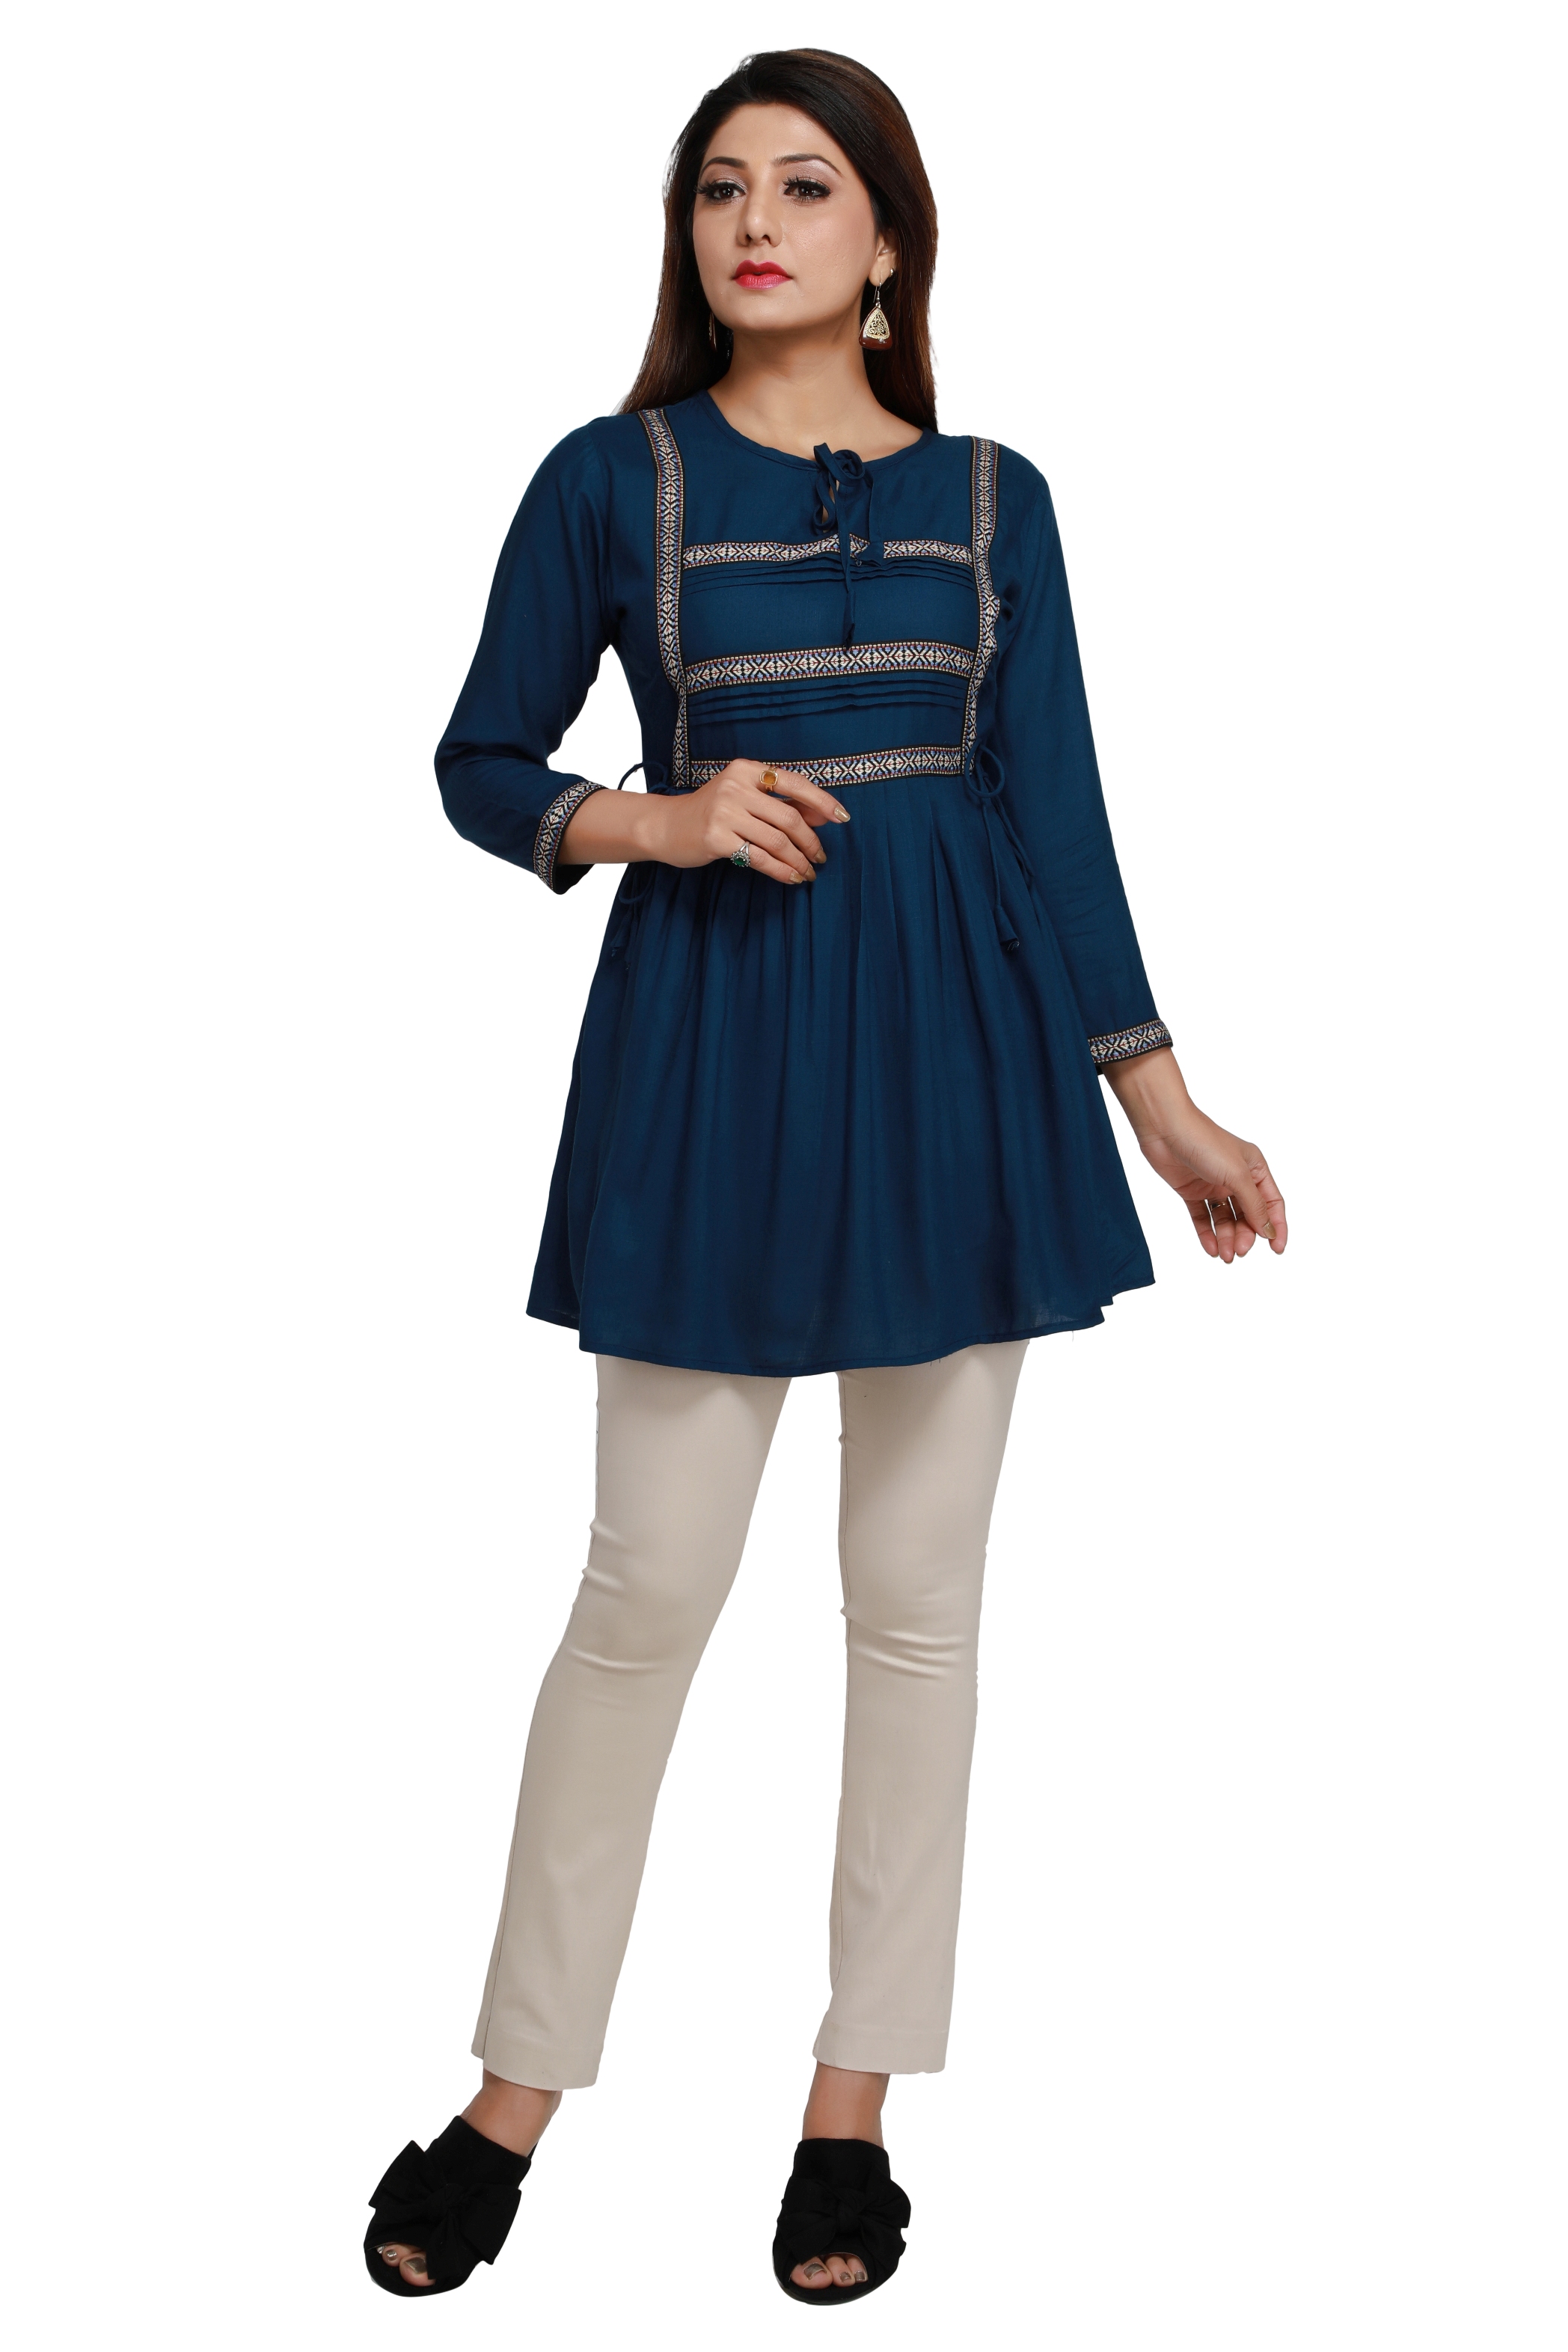 Plain Dress Design Ideas With Lace,Lace Kurti Design Summer Kurti Design  With Lace PARO FASION UPDAT - YouTube